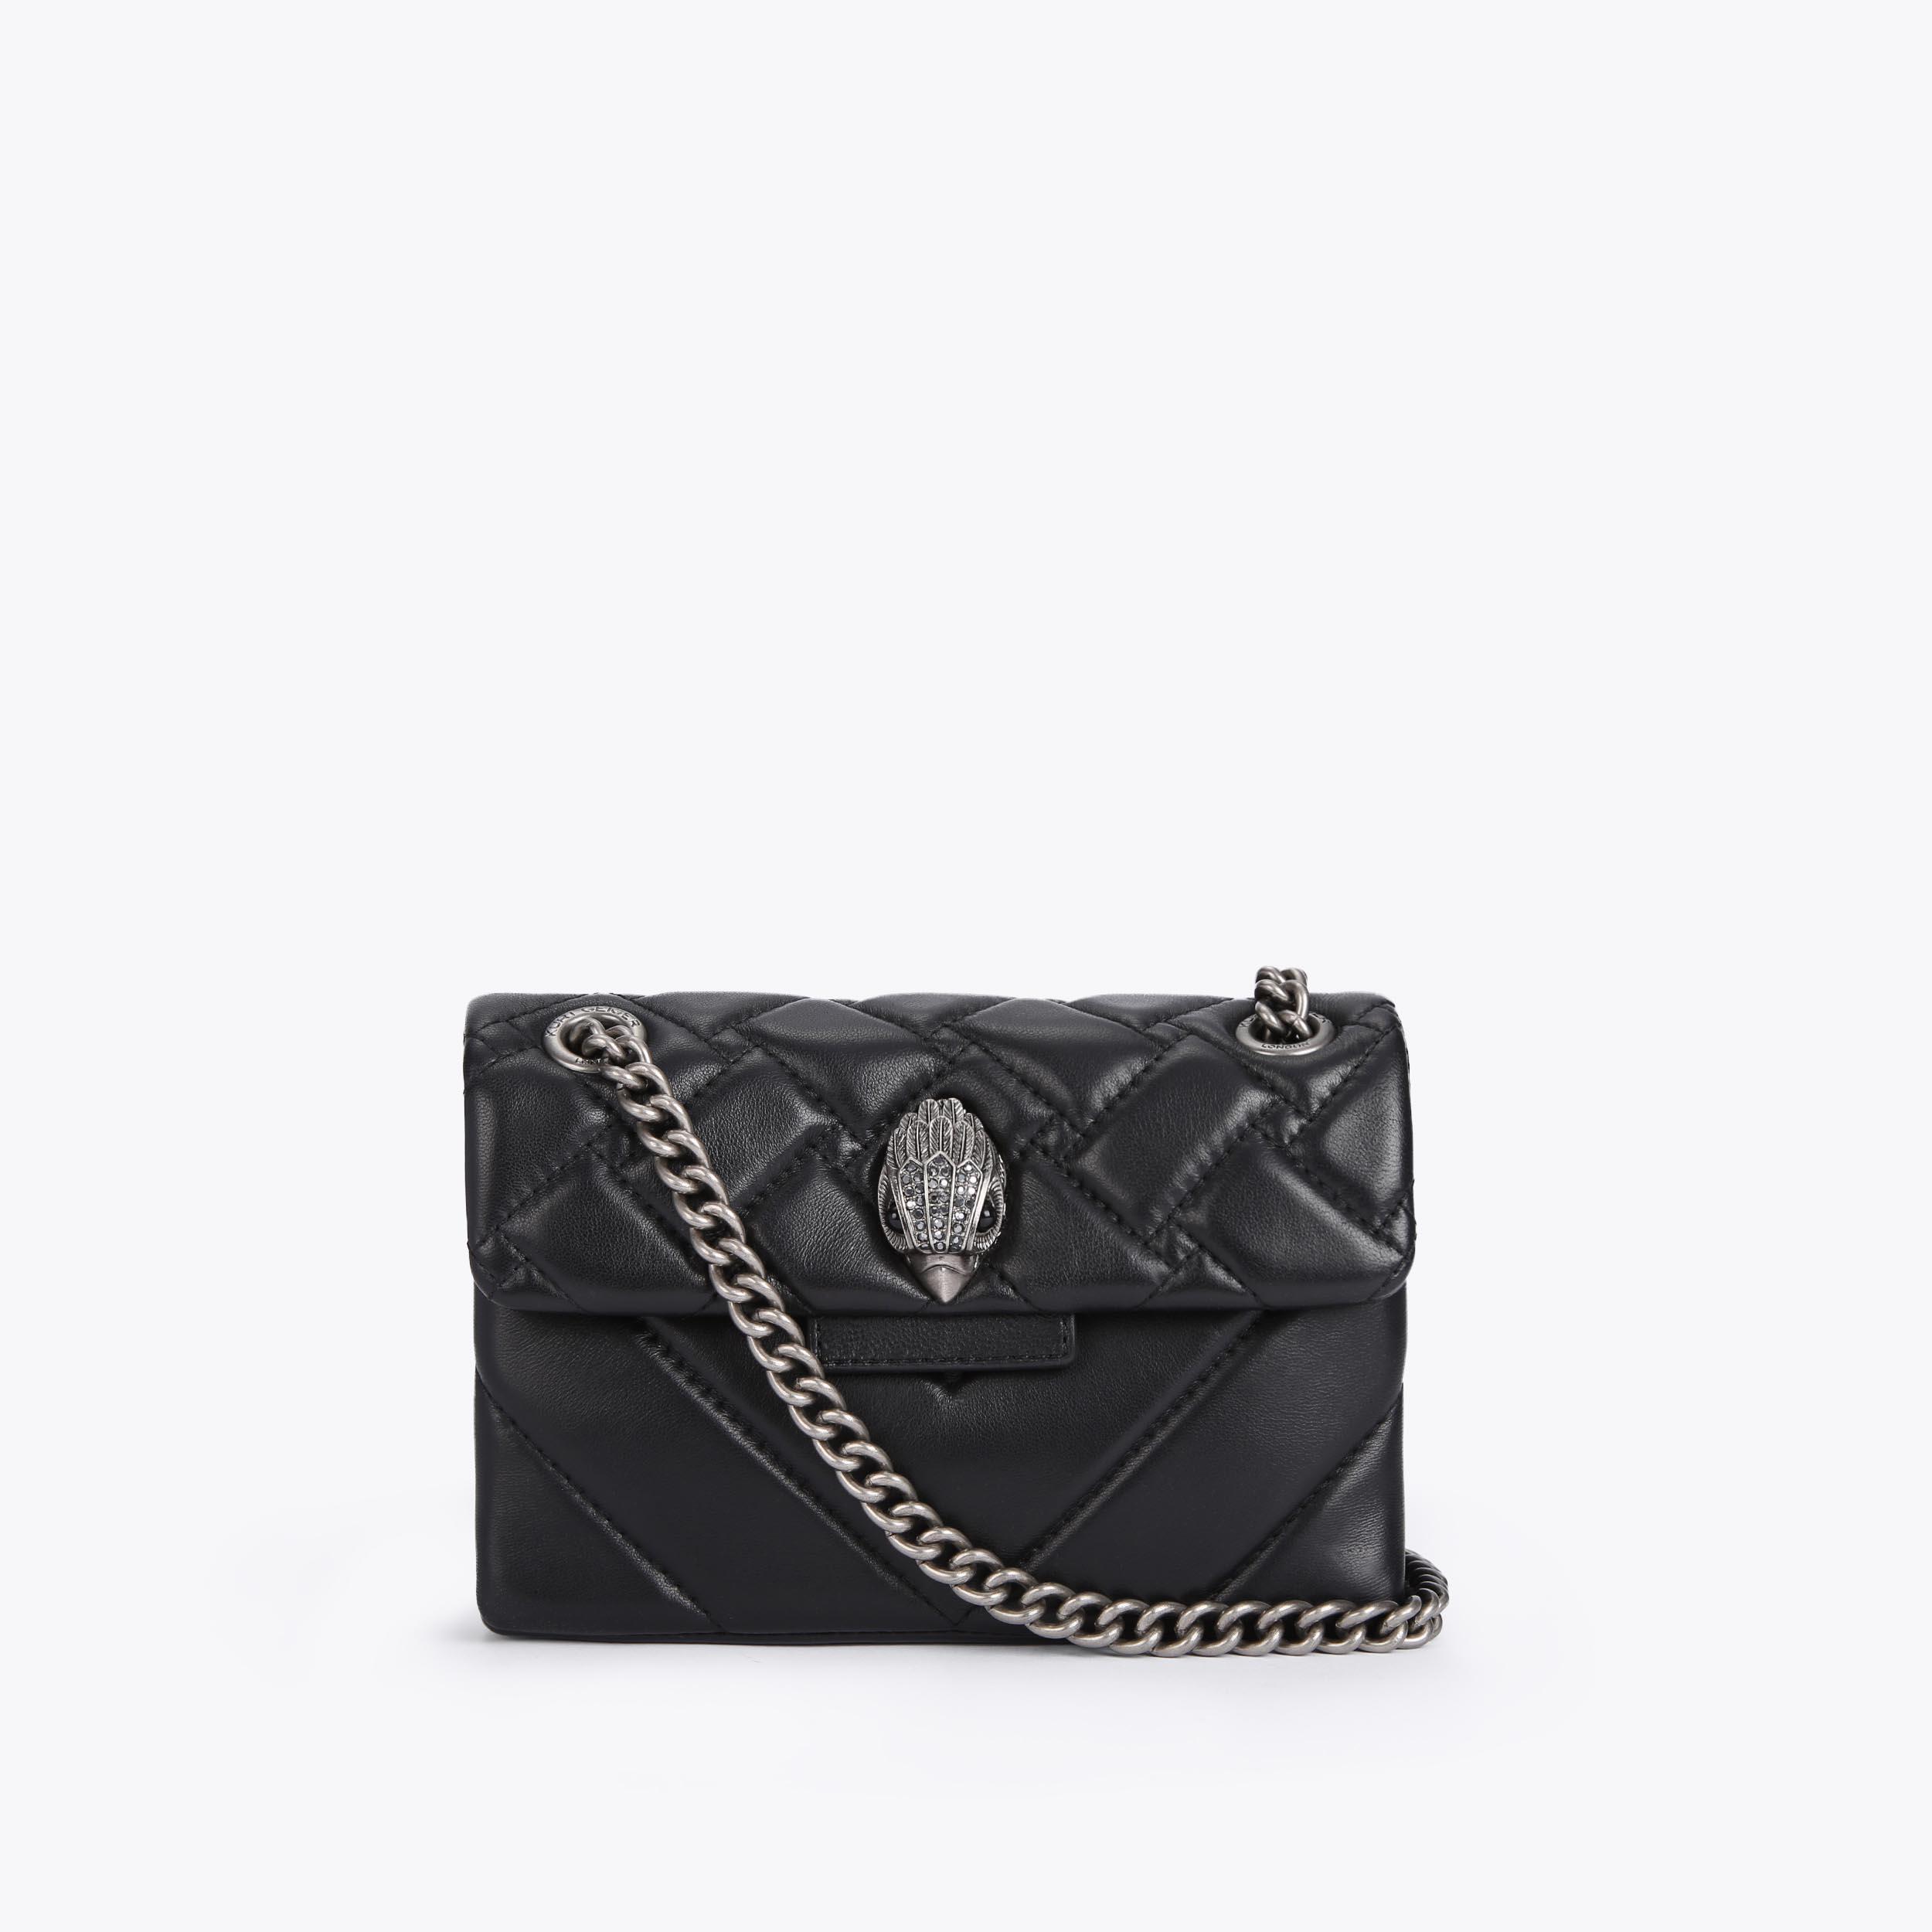 MINI KENSINGTON X BAG all BLACK Quilted Leather Mini Bag by KURT